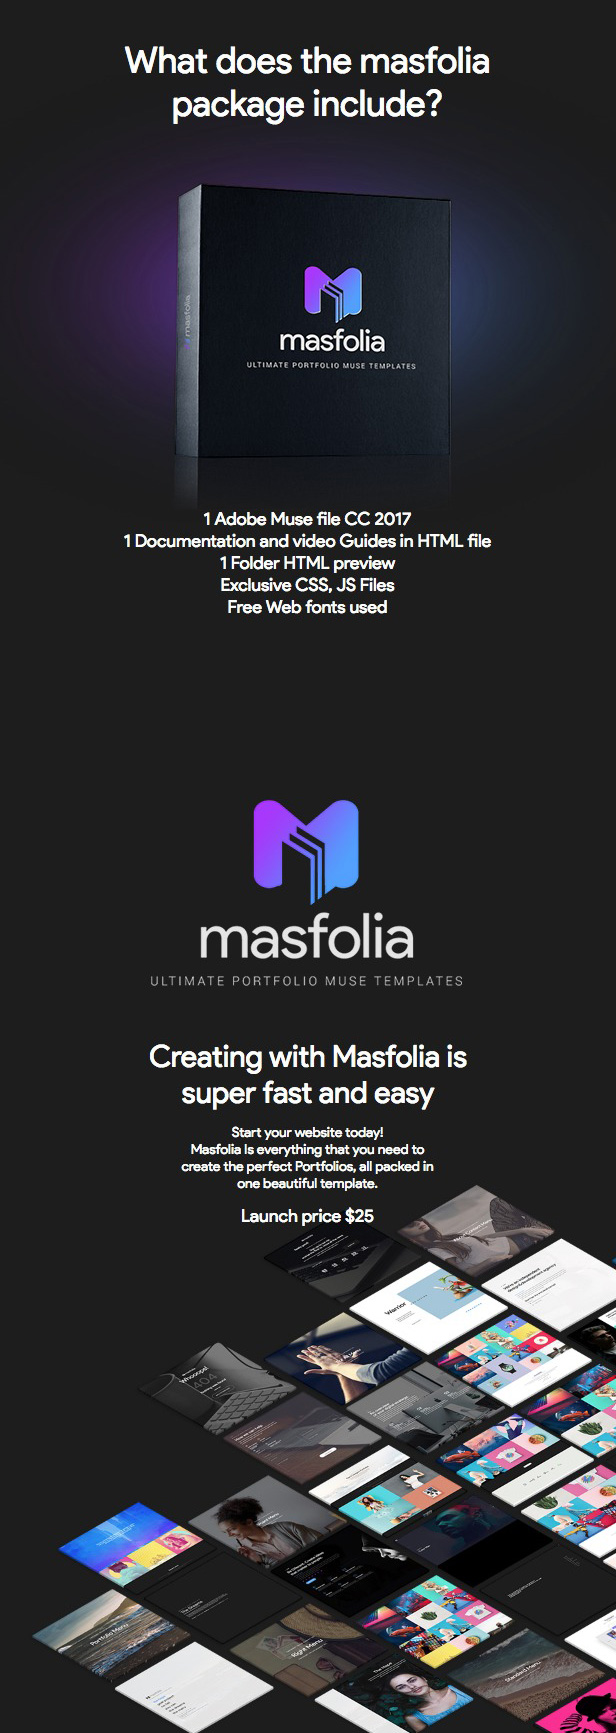 Masfolia - Ultimate Portfolio Muse Templates - 3